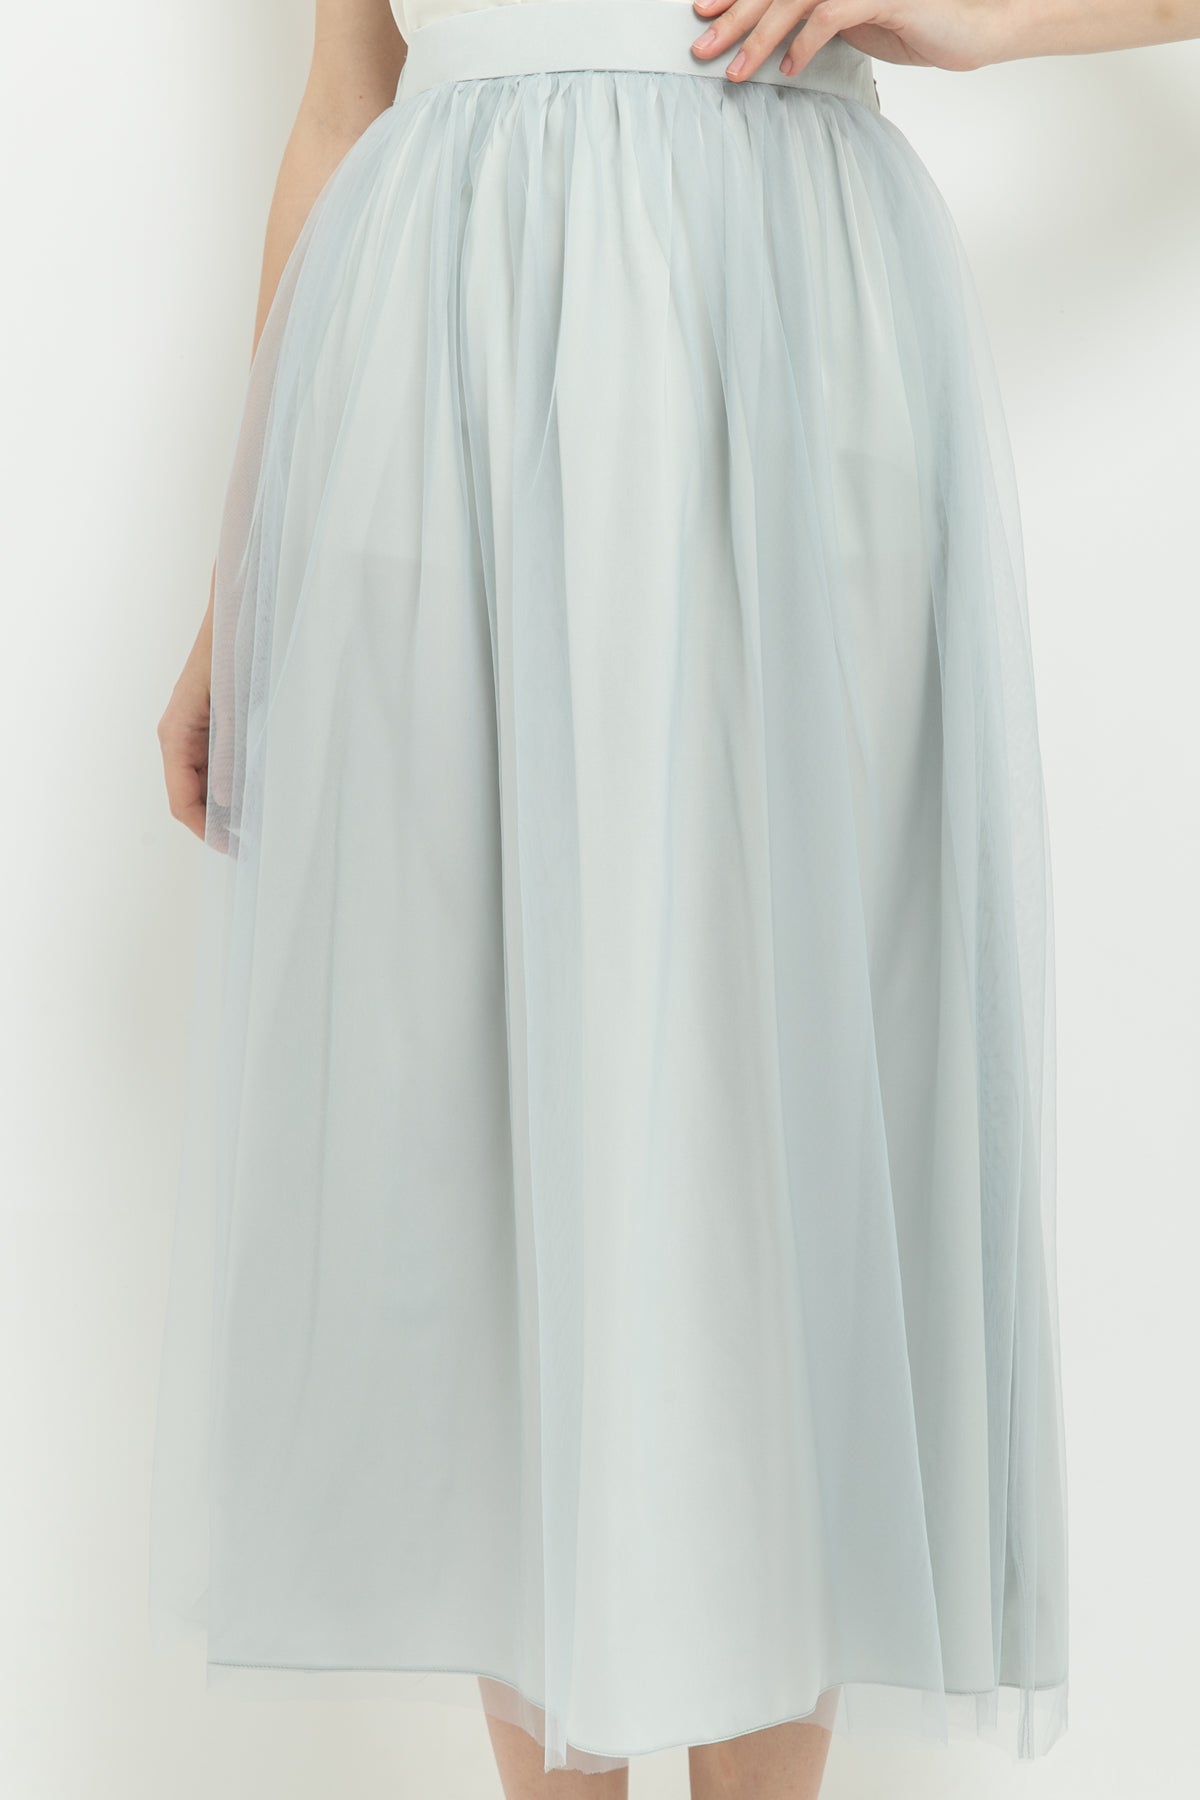 Rania Tulle Skirt in Gray